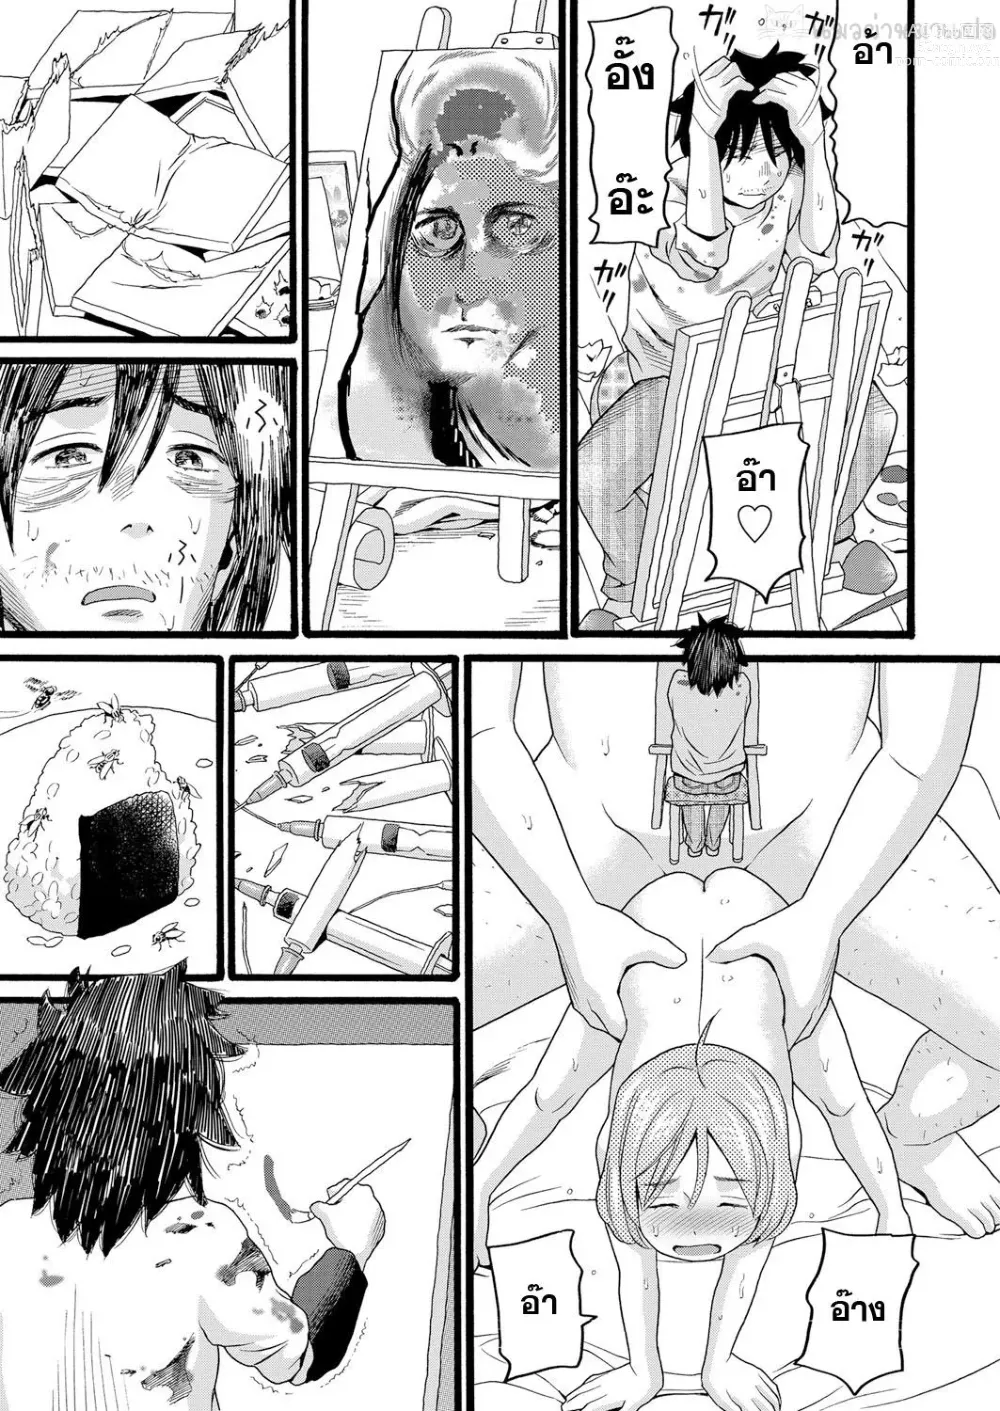 Page 192 of manga Yurui Ko